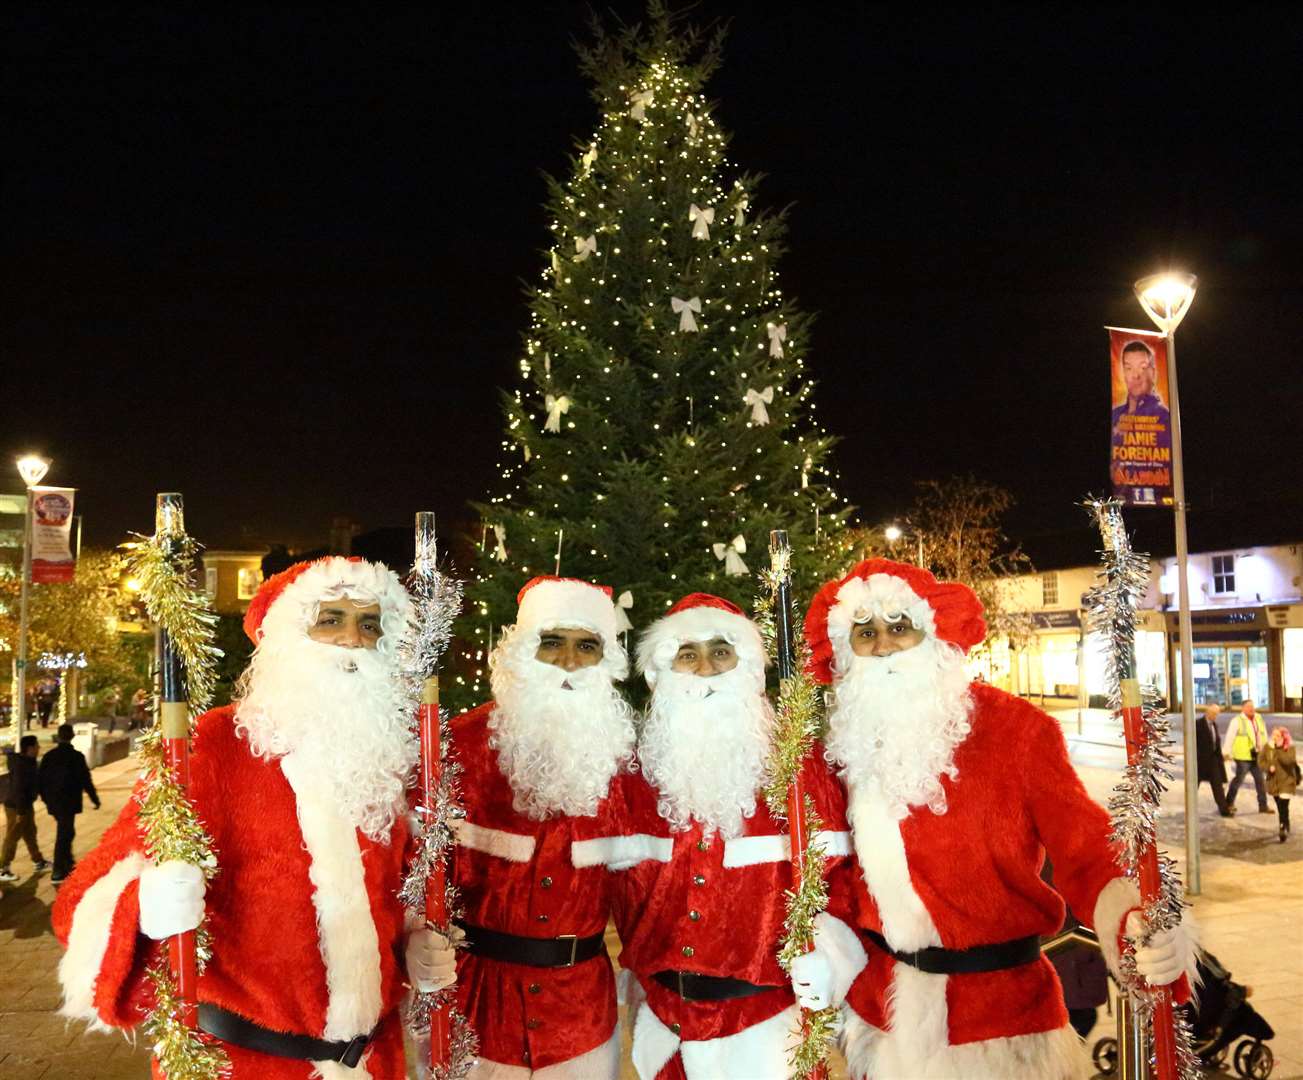 Gravesend's Christmas festivities were a big success last year.